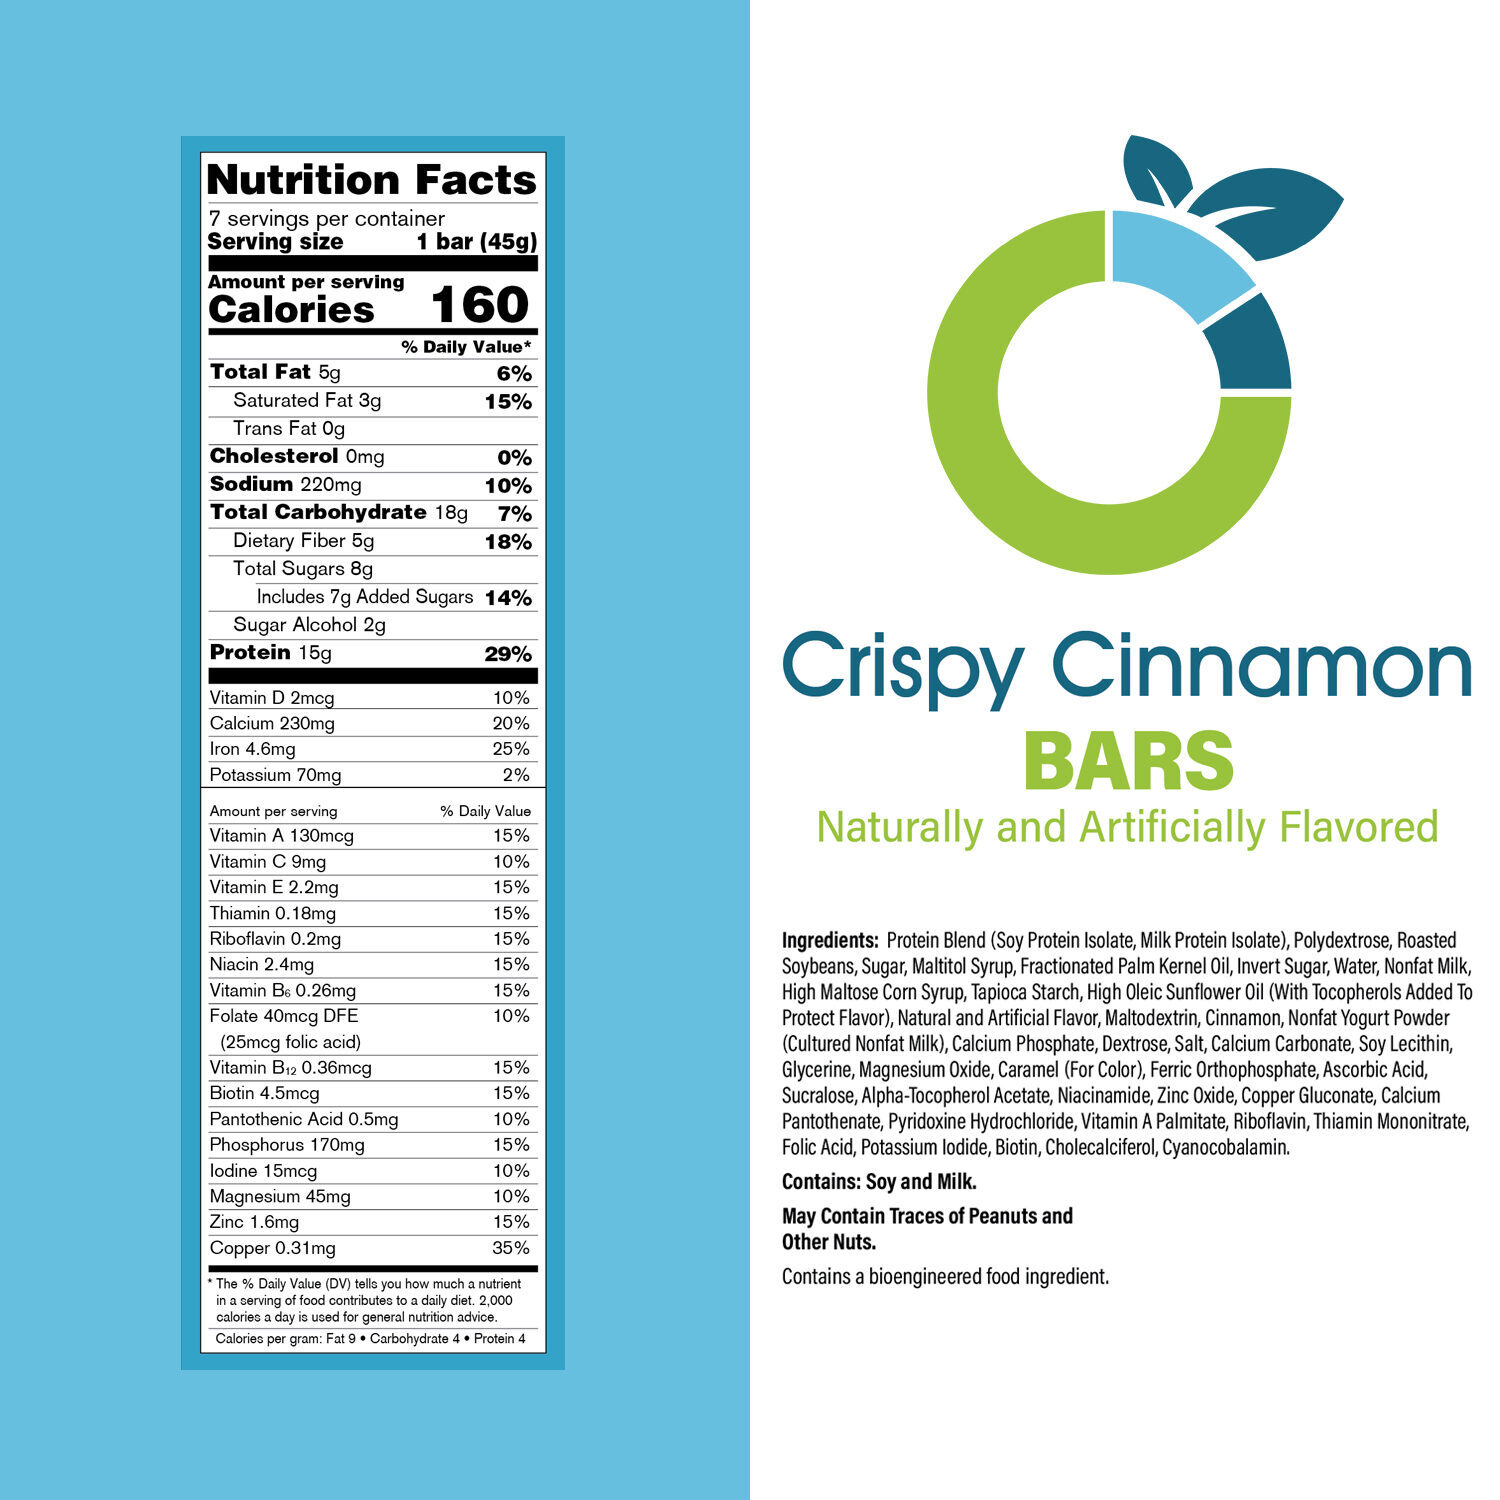 Crispy-Cinnamon-Bars-Panel_05dc05dc0_78773